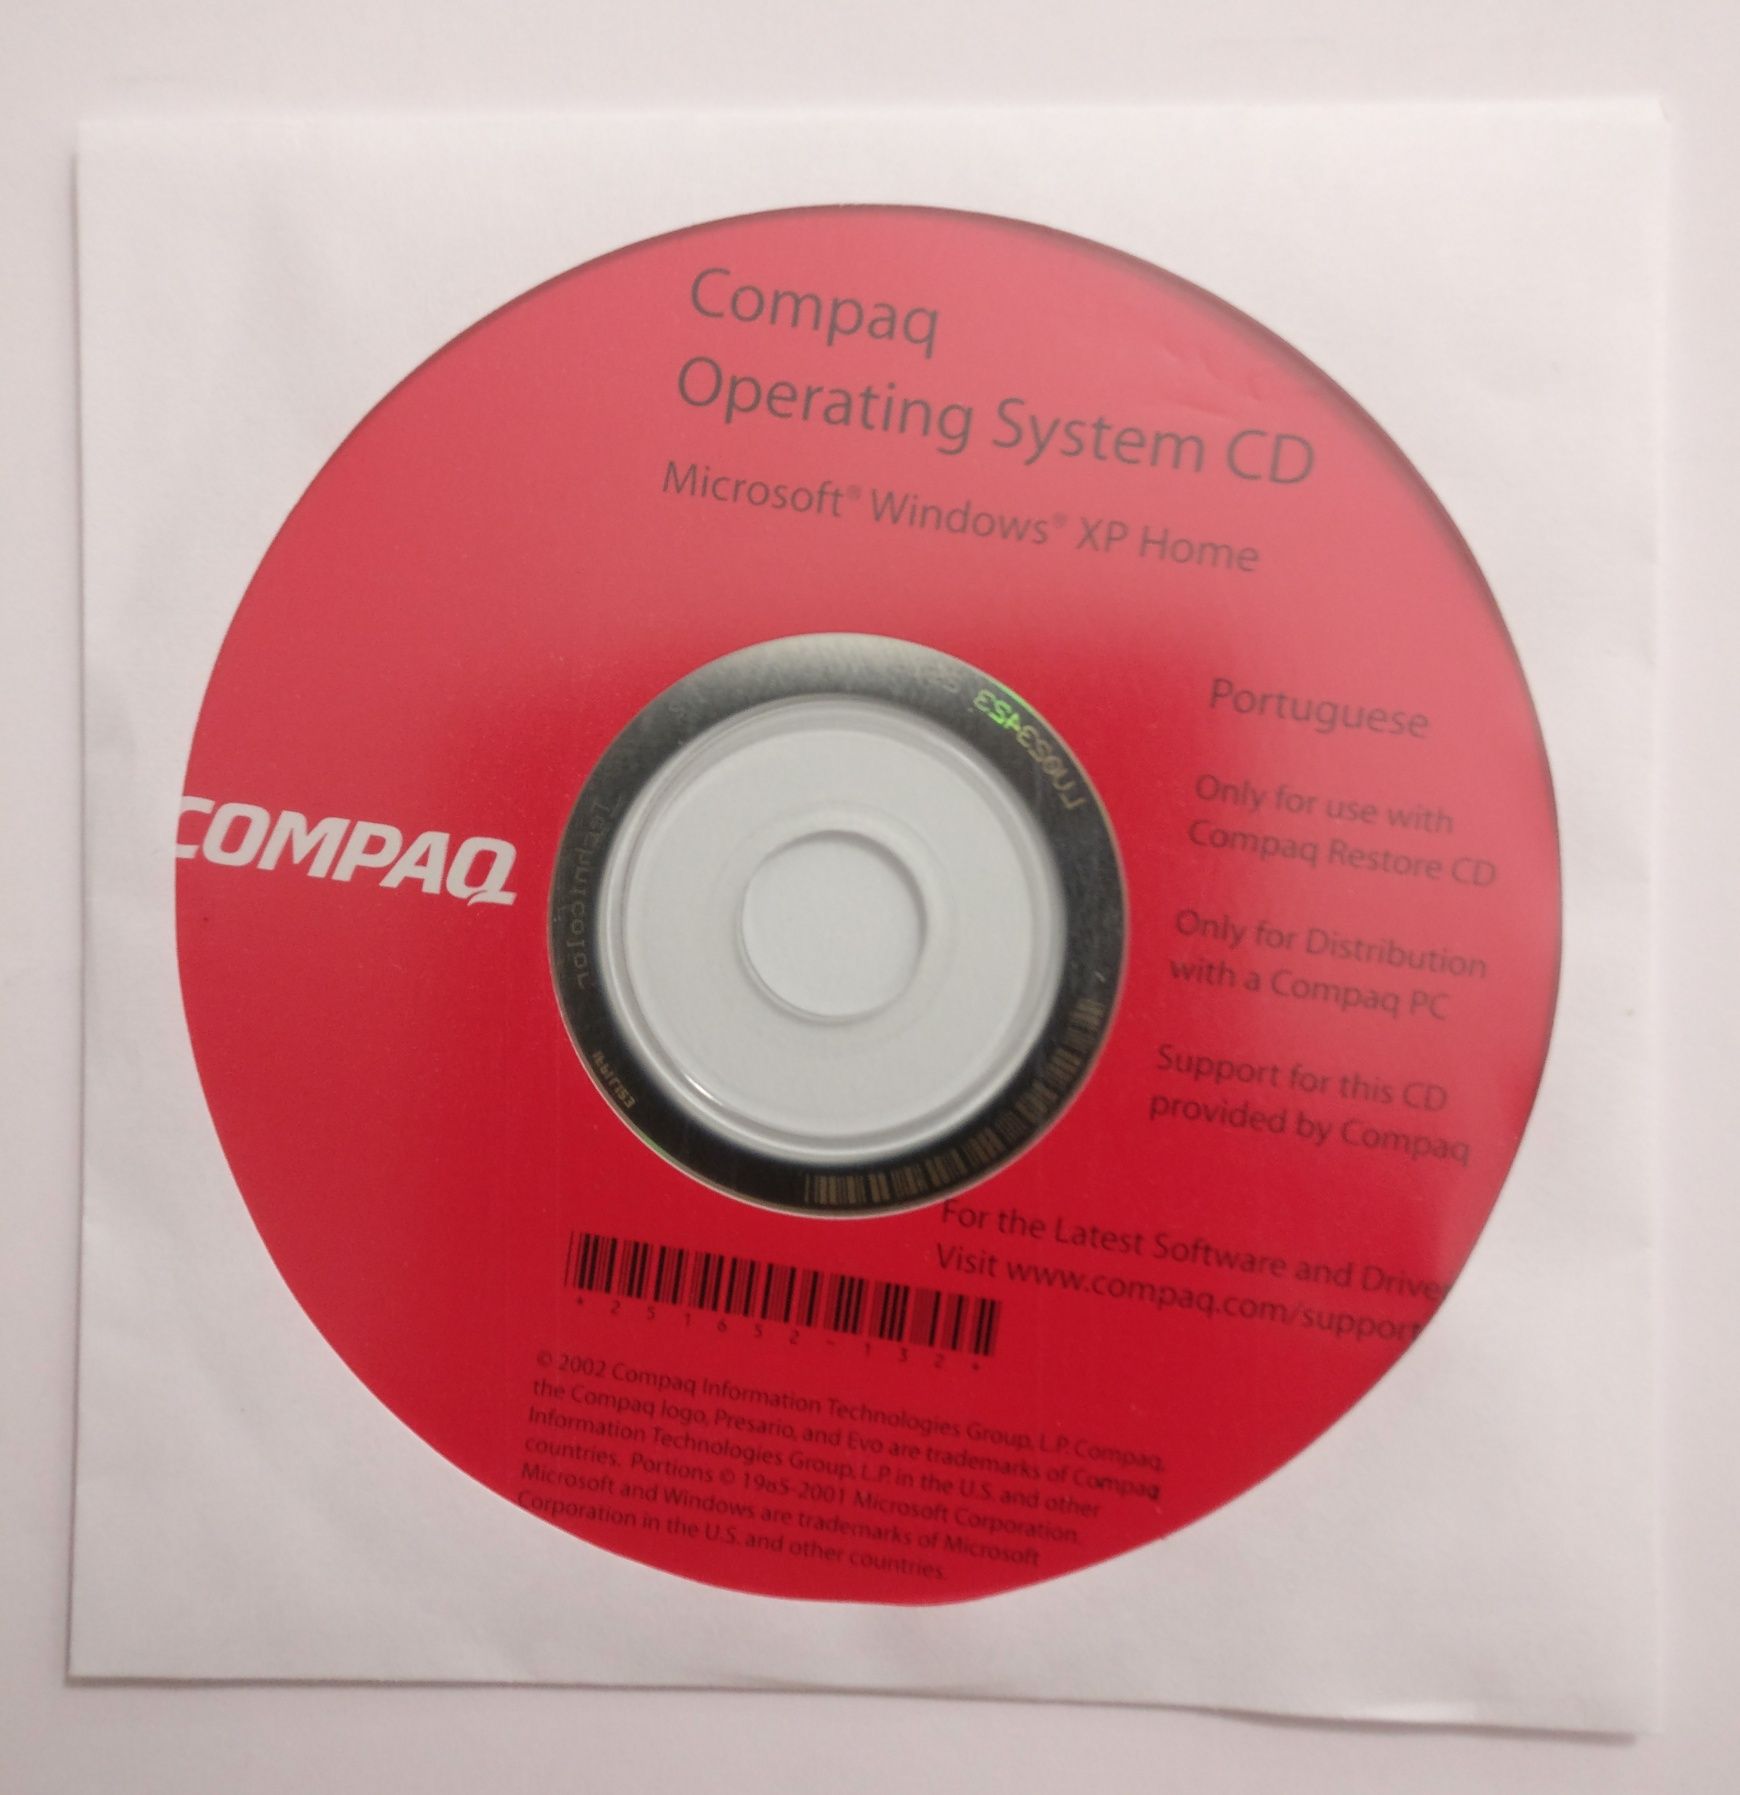 Compaq operating system CD